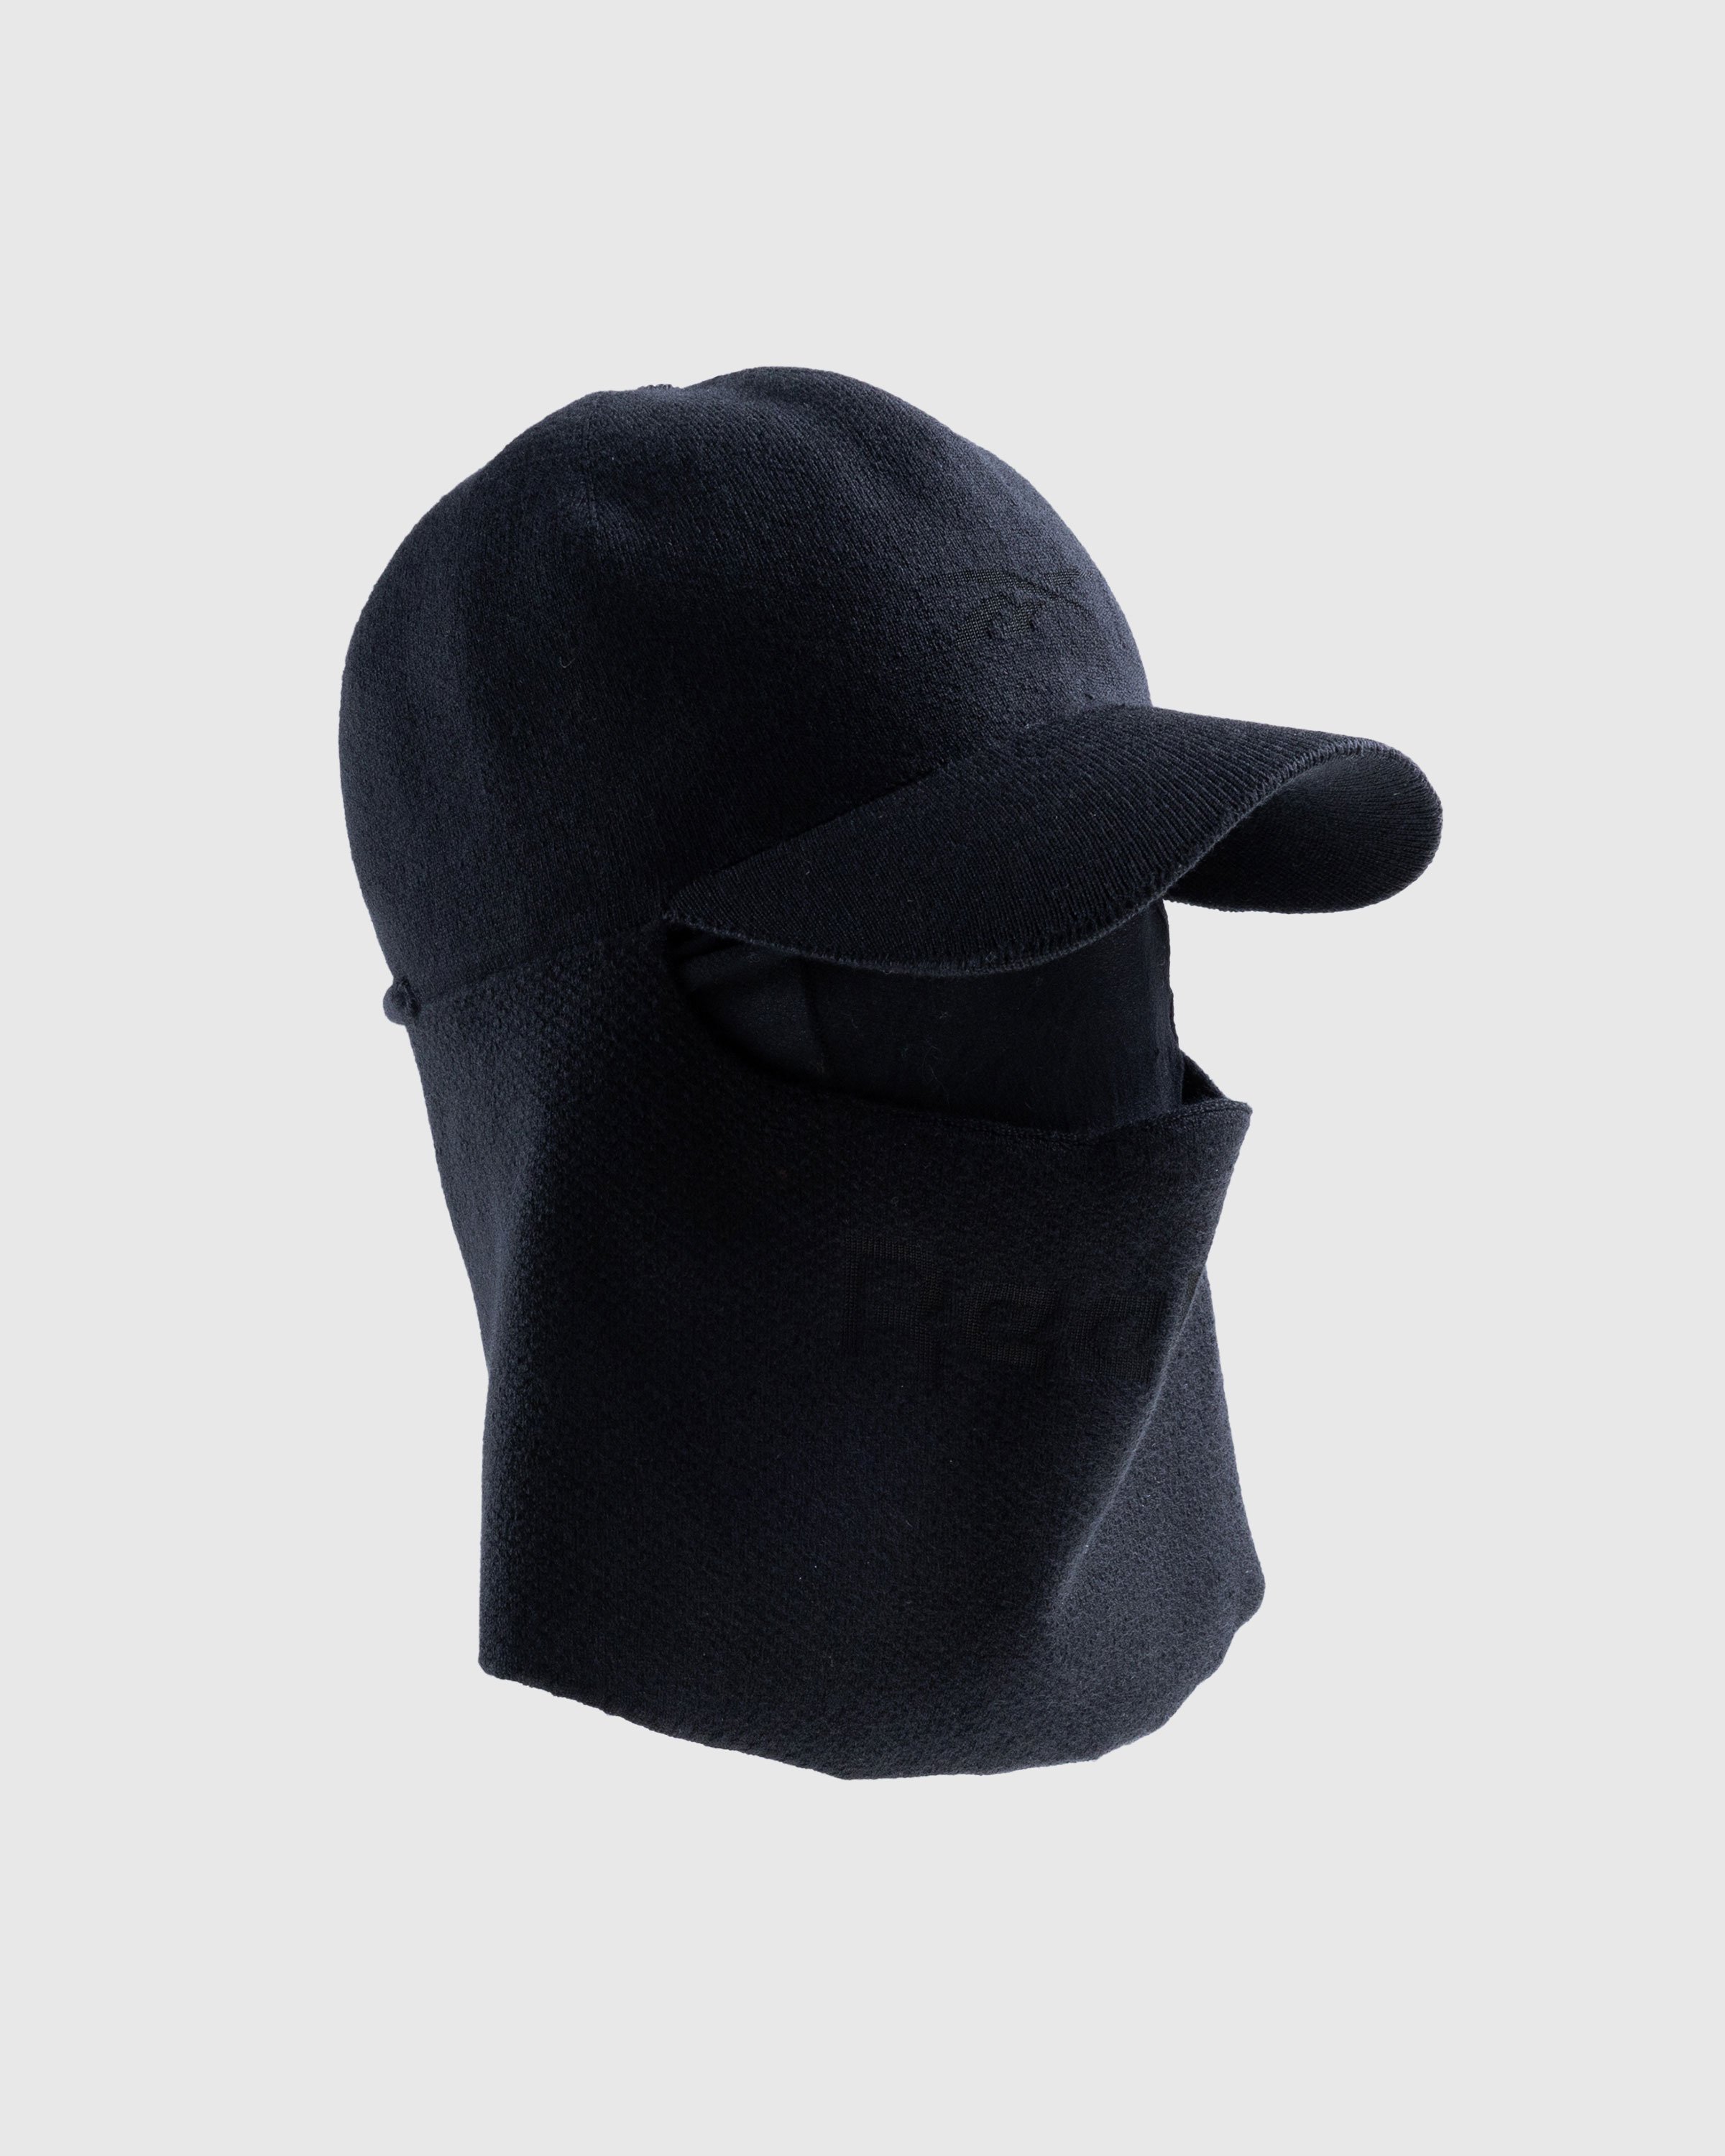 Reebok - Knit Mask Hat Black - Accessories - Black - Image 2